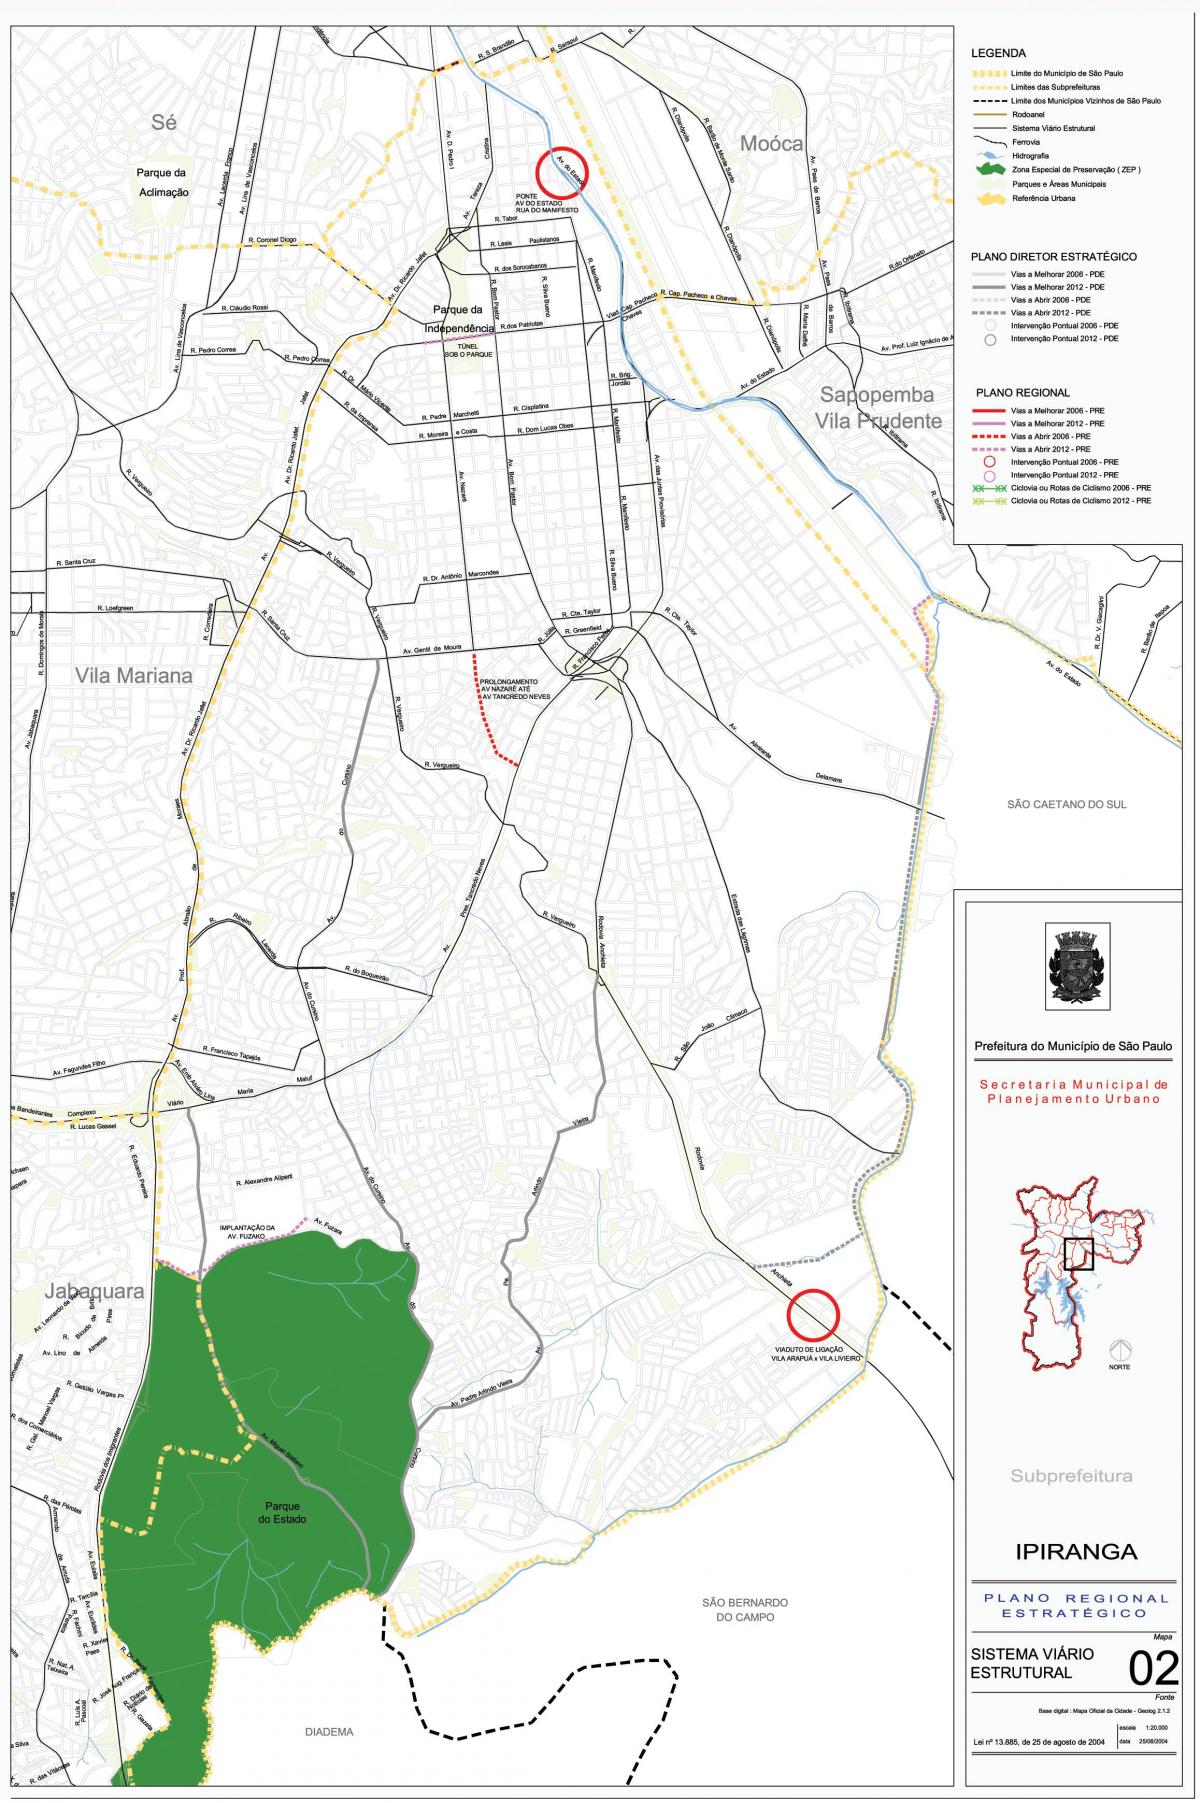 Mapa de Ipiranga São Paulo - Estradas